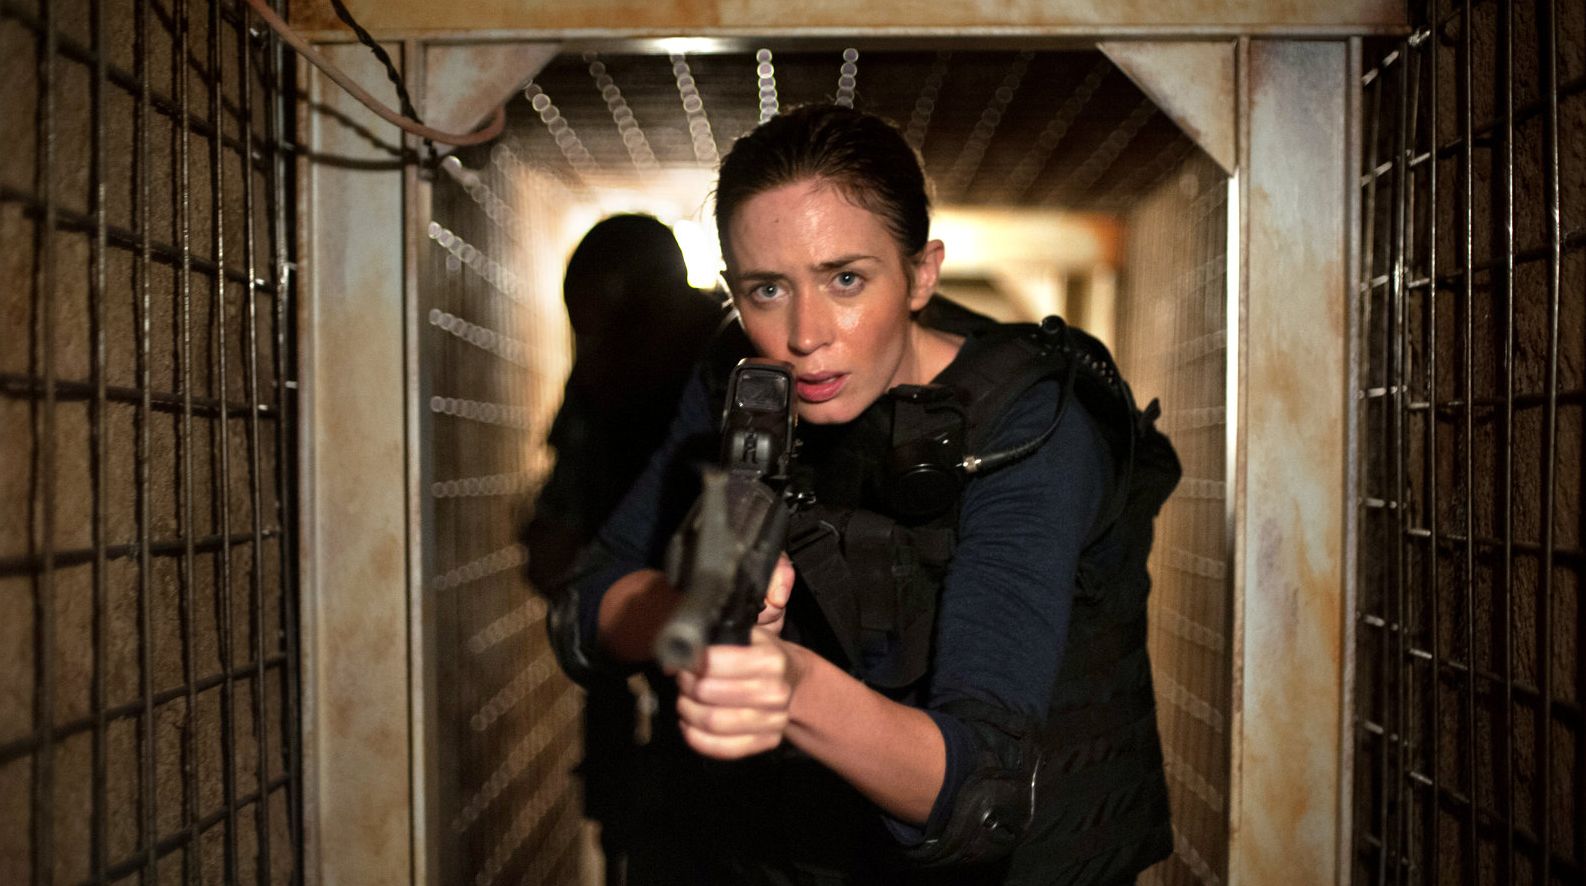 Emily Blunt as Kate Macer - 'Sicario' tunnel scene